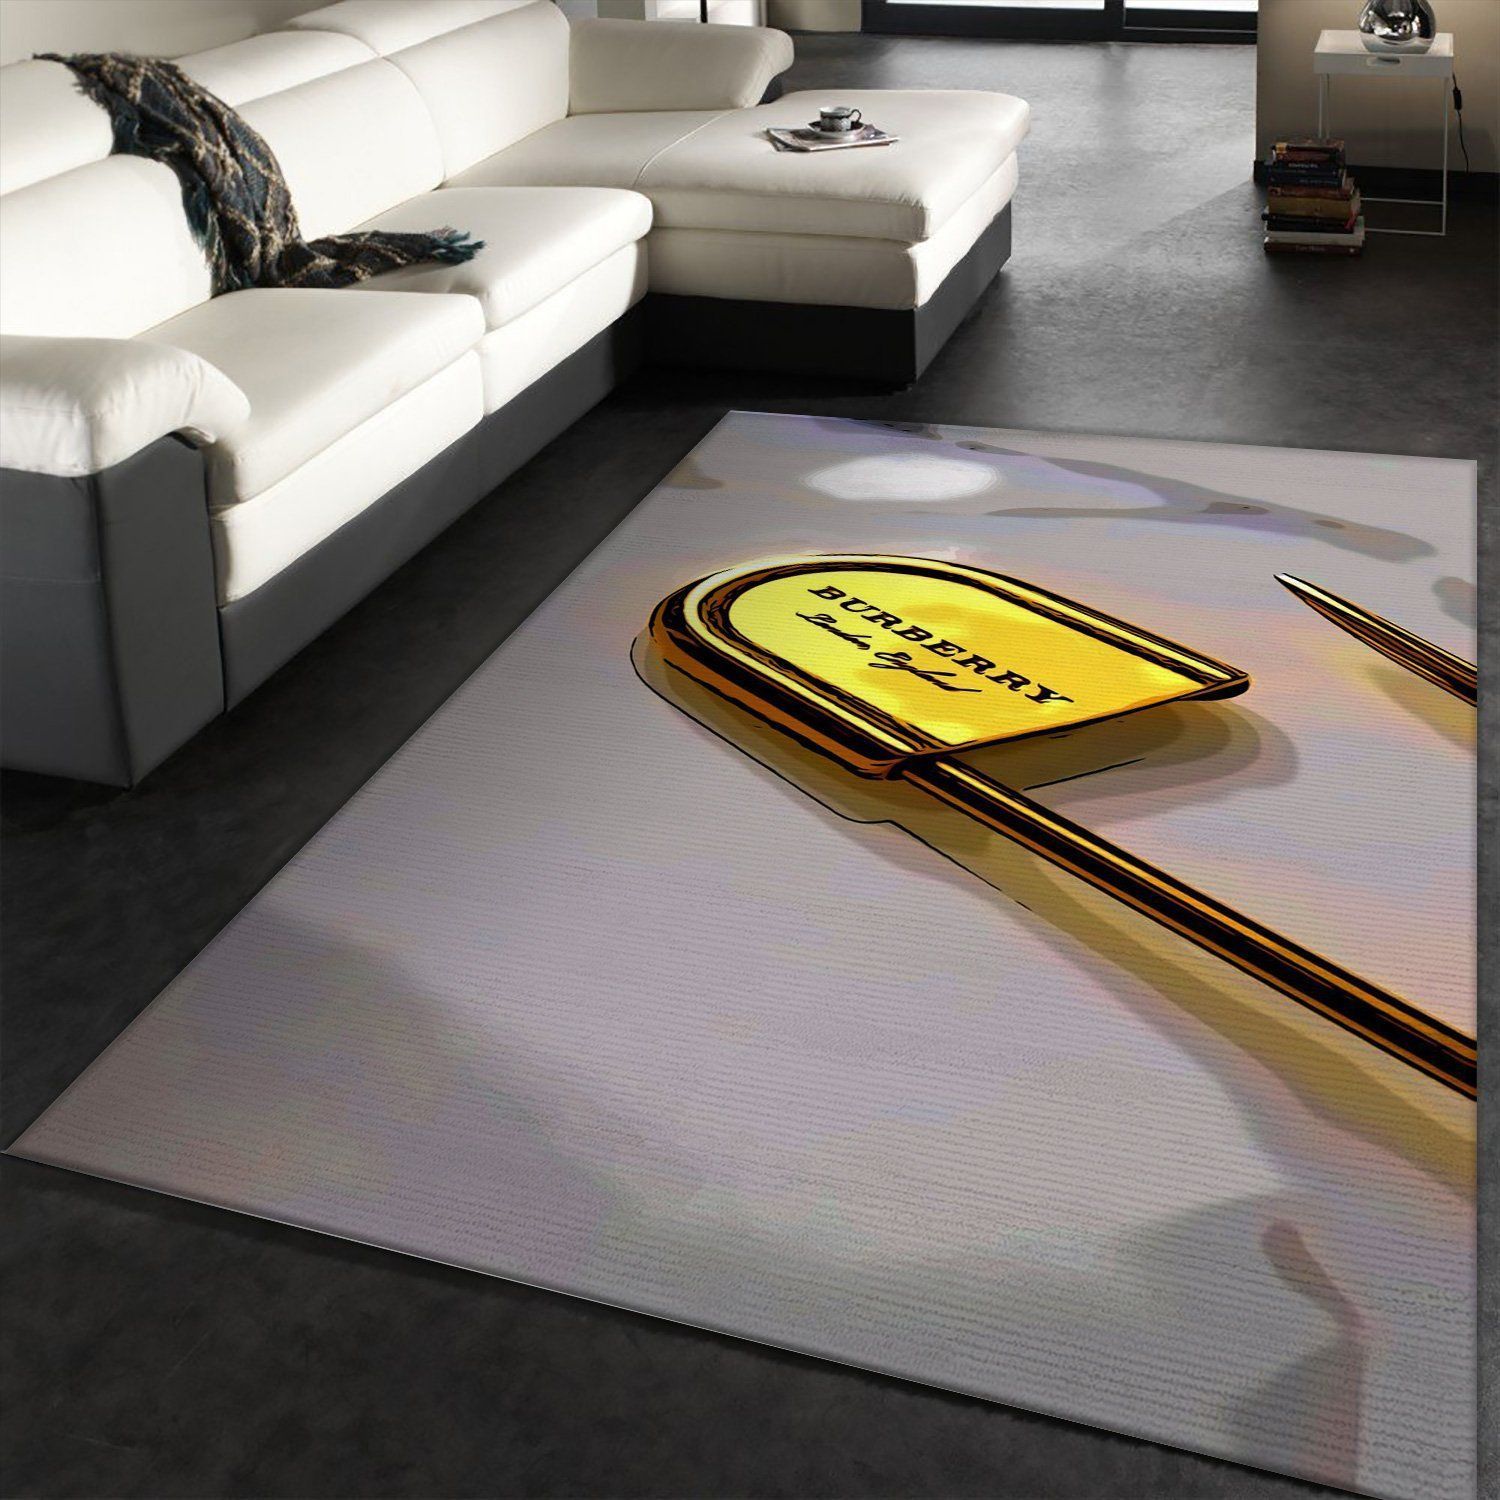 Burberry Rug Fashion Brand Rug Home Decor Floor Decor - Indoor Outdoor Rugs 1